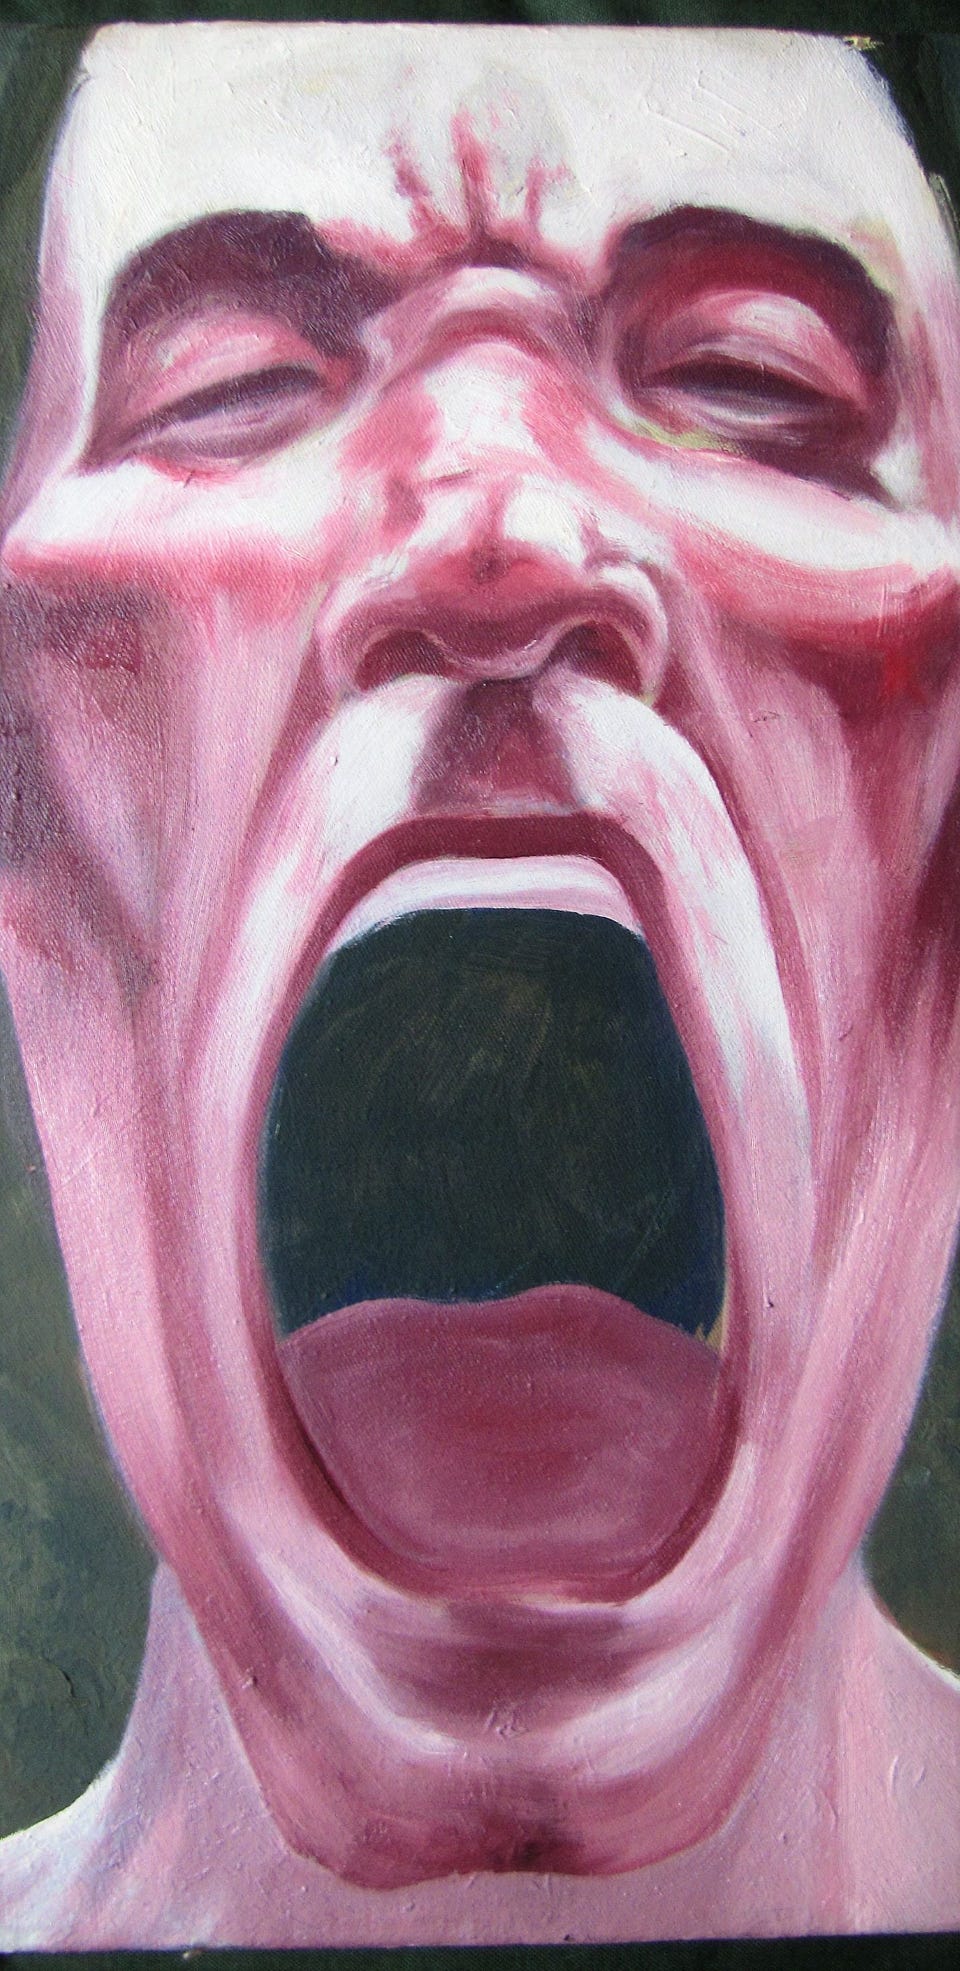 Oil Painting by Sean P. Durham, Berlin, copyright 2005
"Screaming Man"